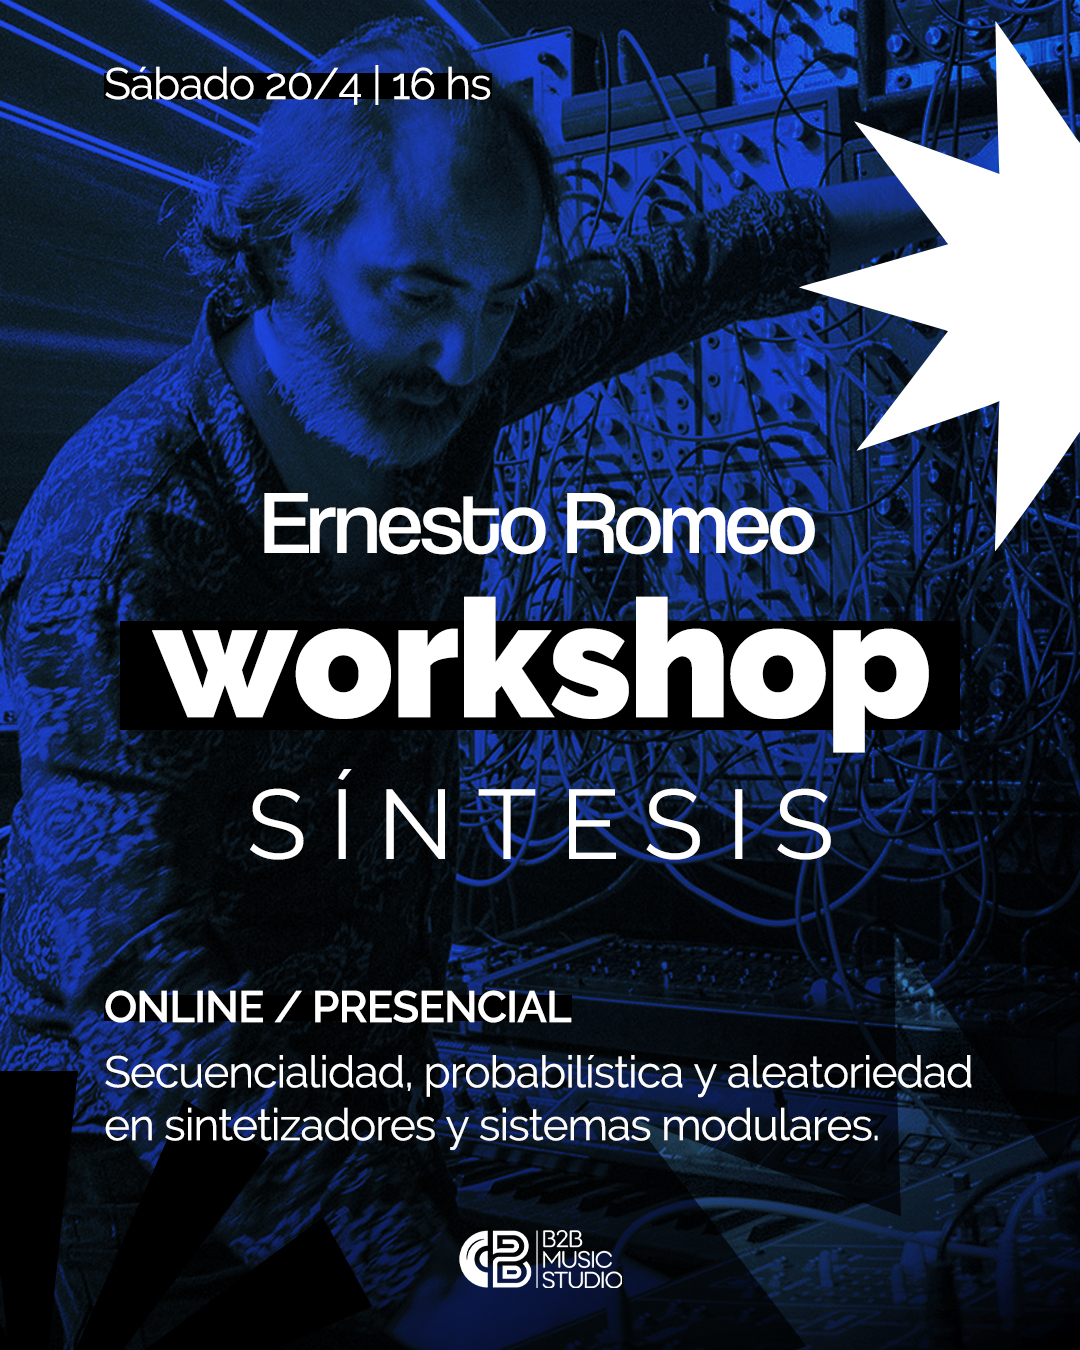 b2b-music-studio-diseño-workshop-ernesto-romeo